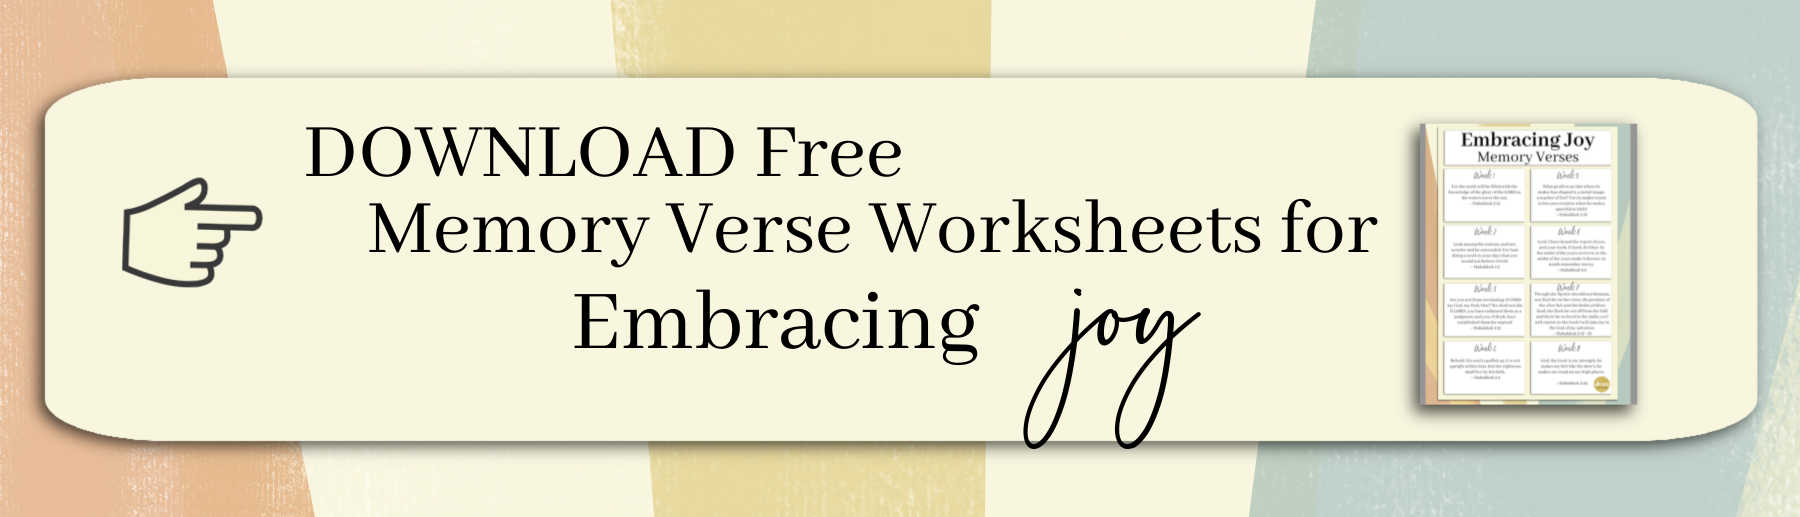 Download Embracing Joy Memory Verse Worksheets